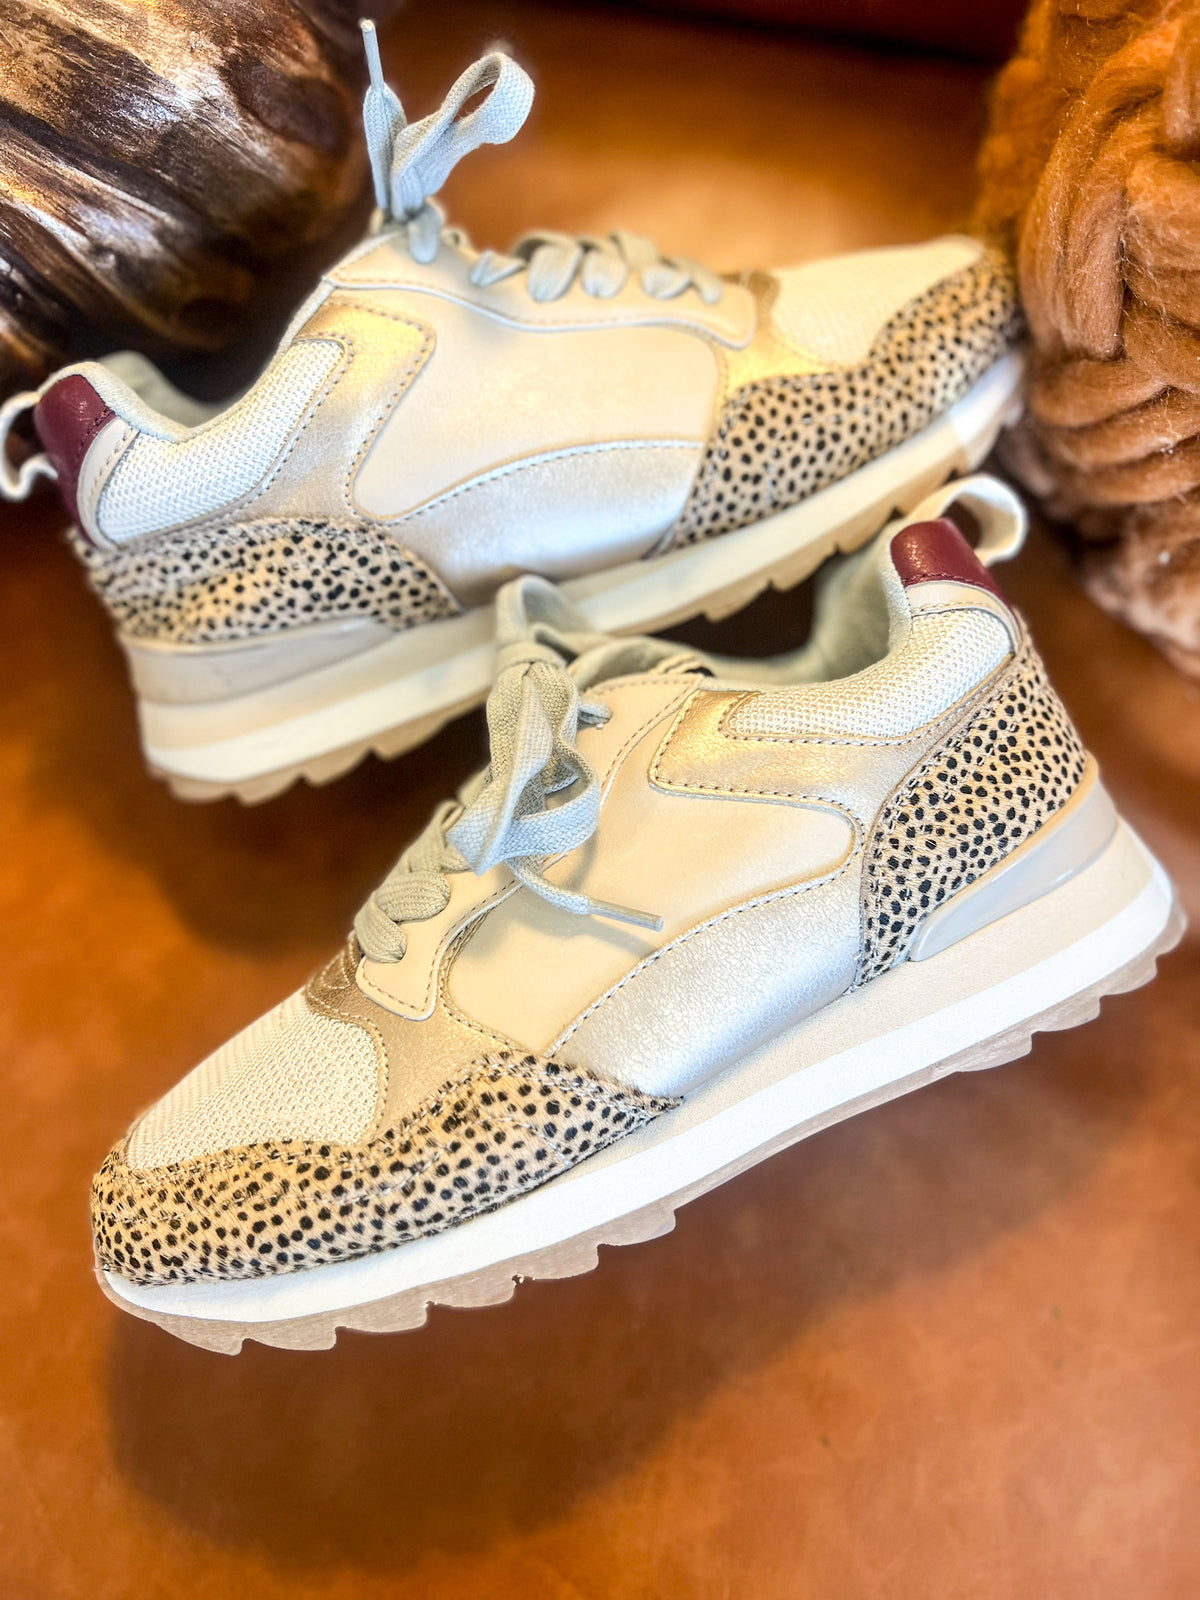 Parker Cheetah Sneakers